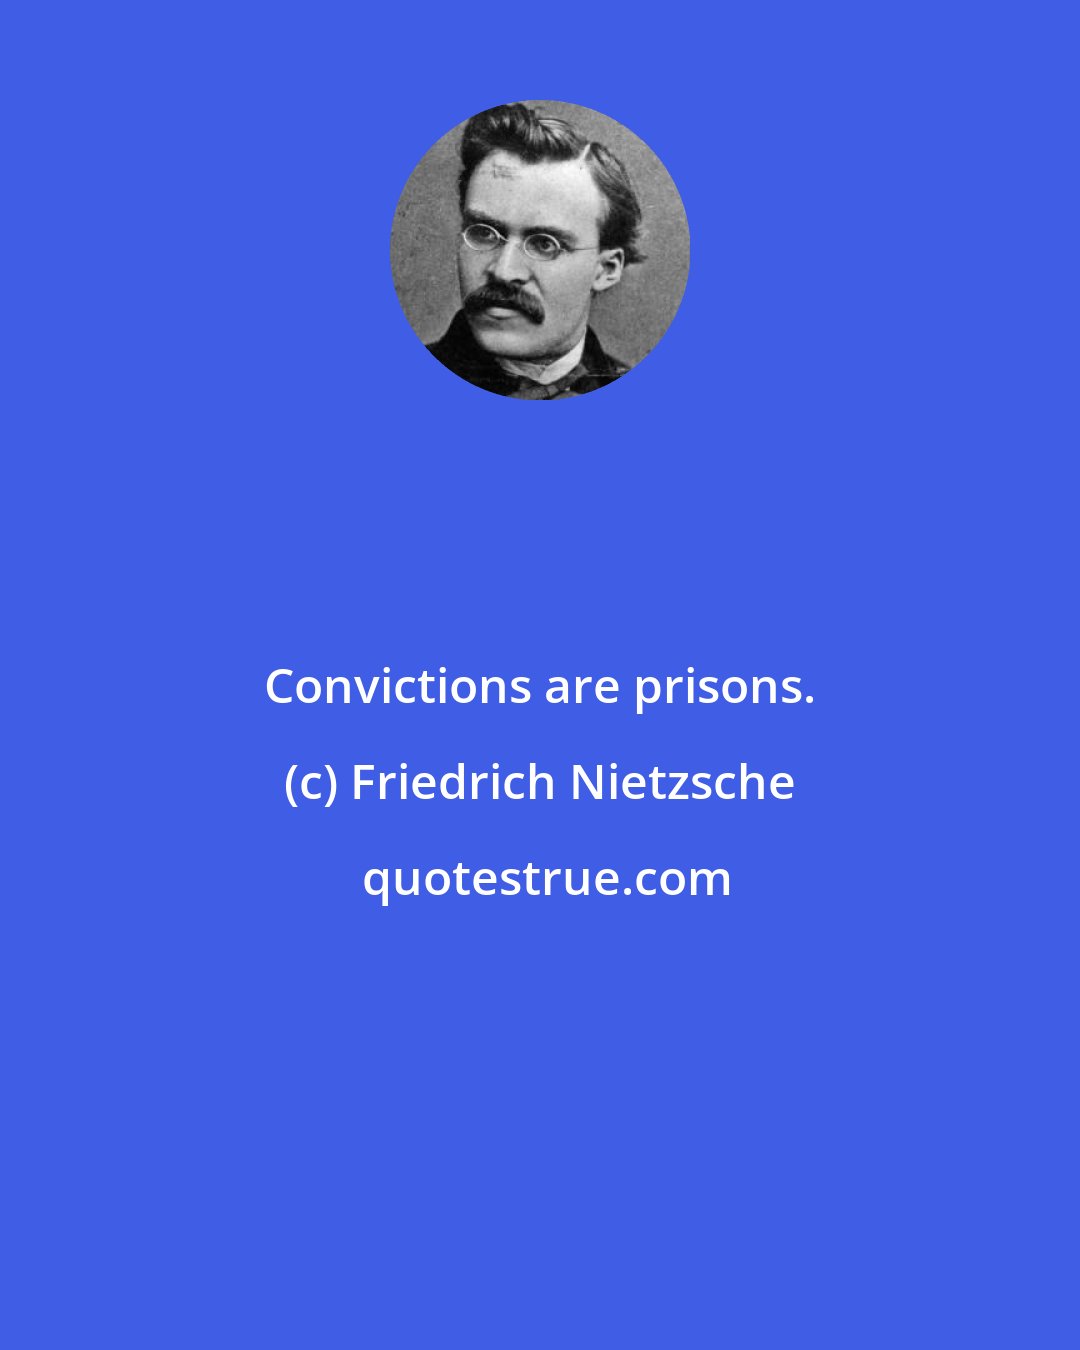 Friedrich Nietzsche: Convictions are prisons.